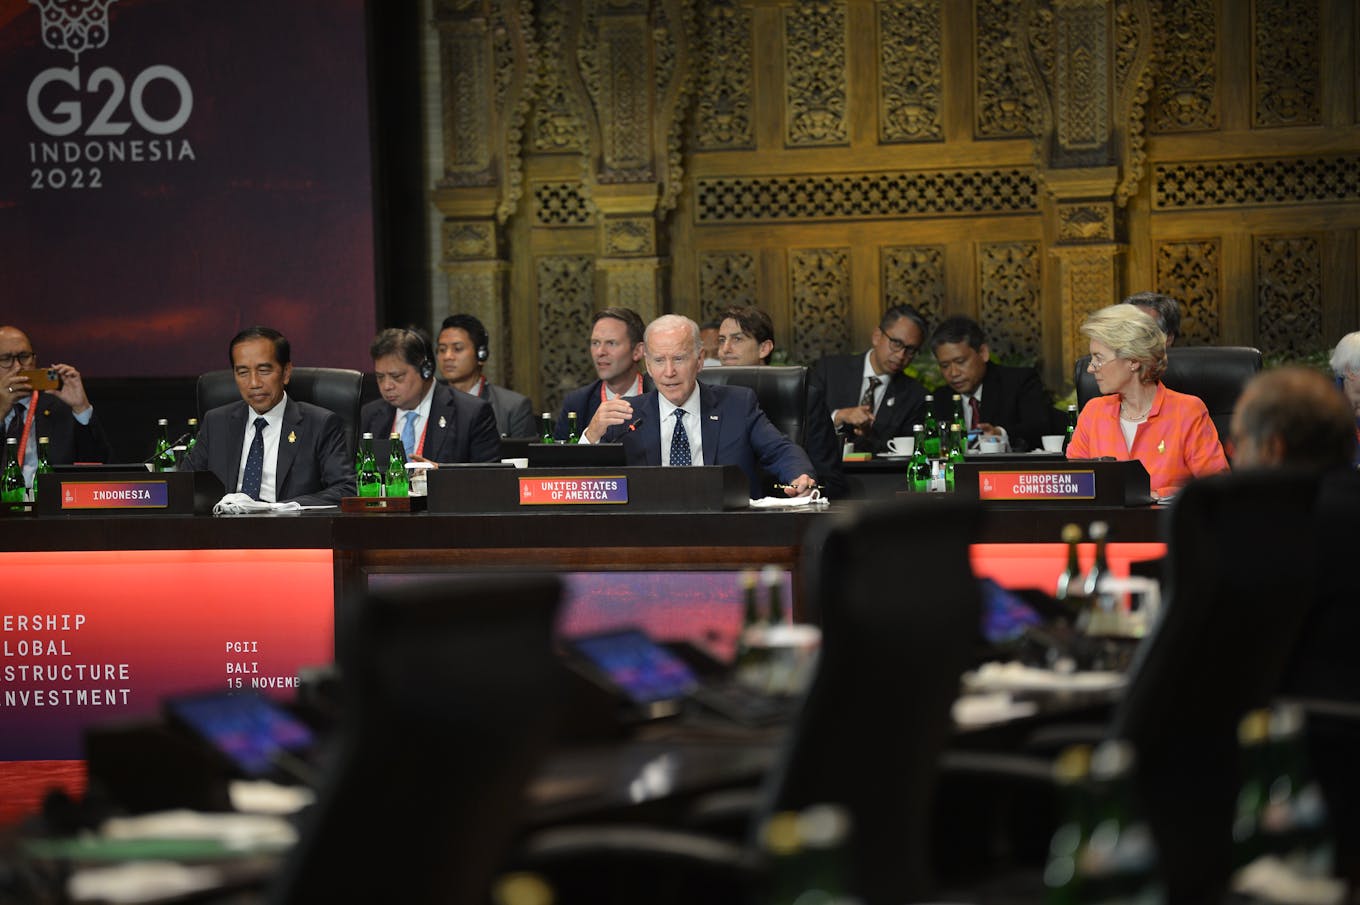 G20 leaders Joe Biden and Jokowi